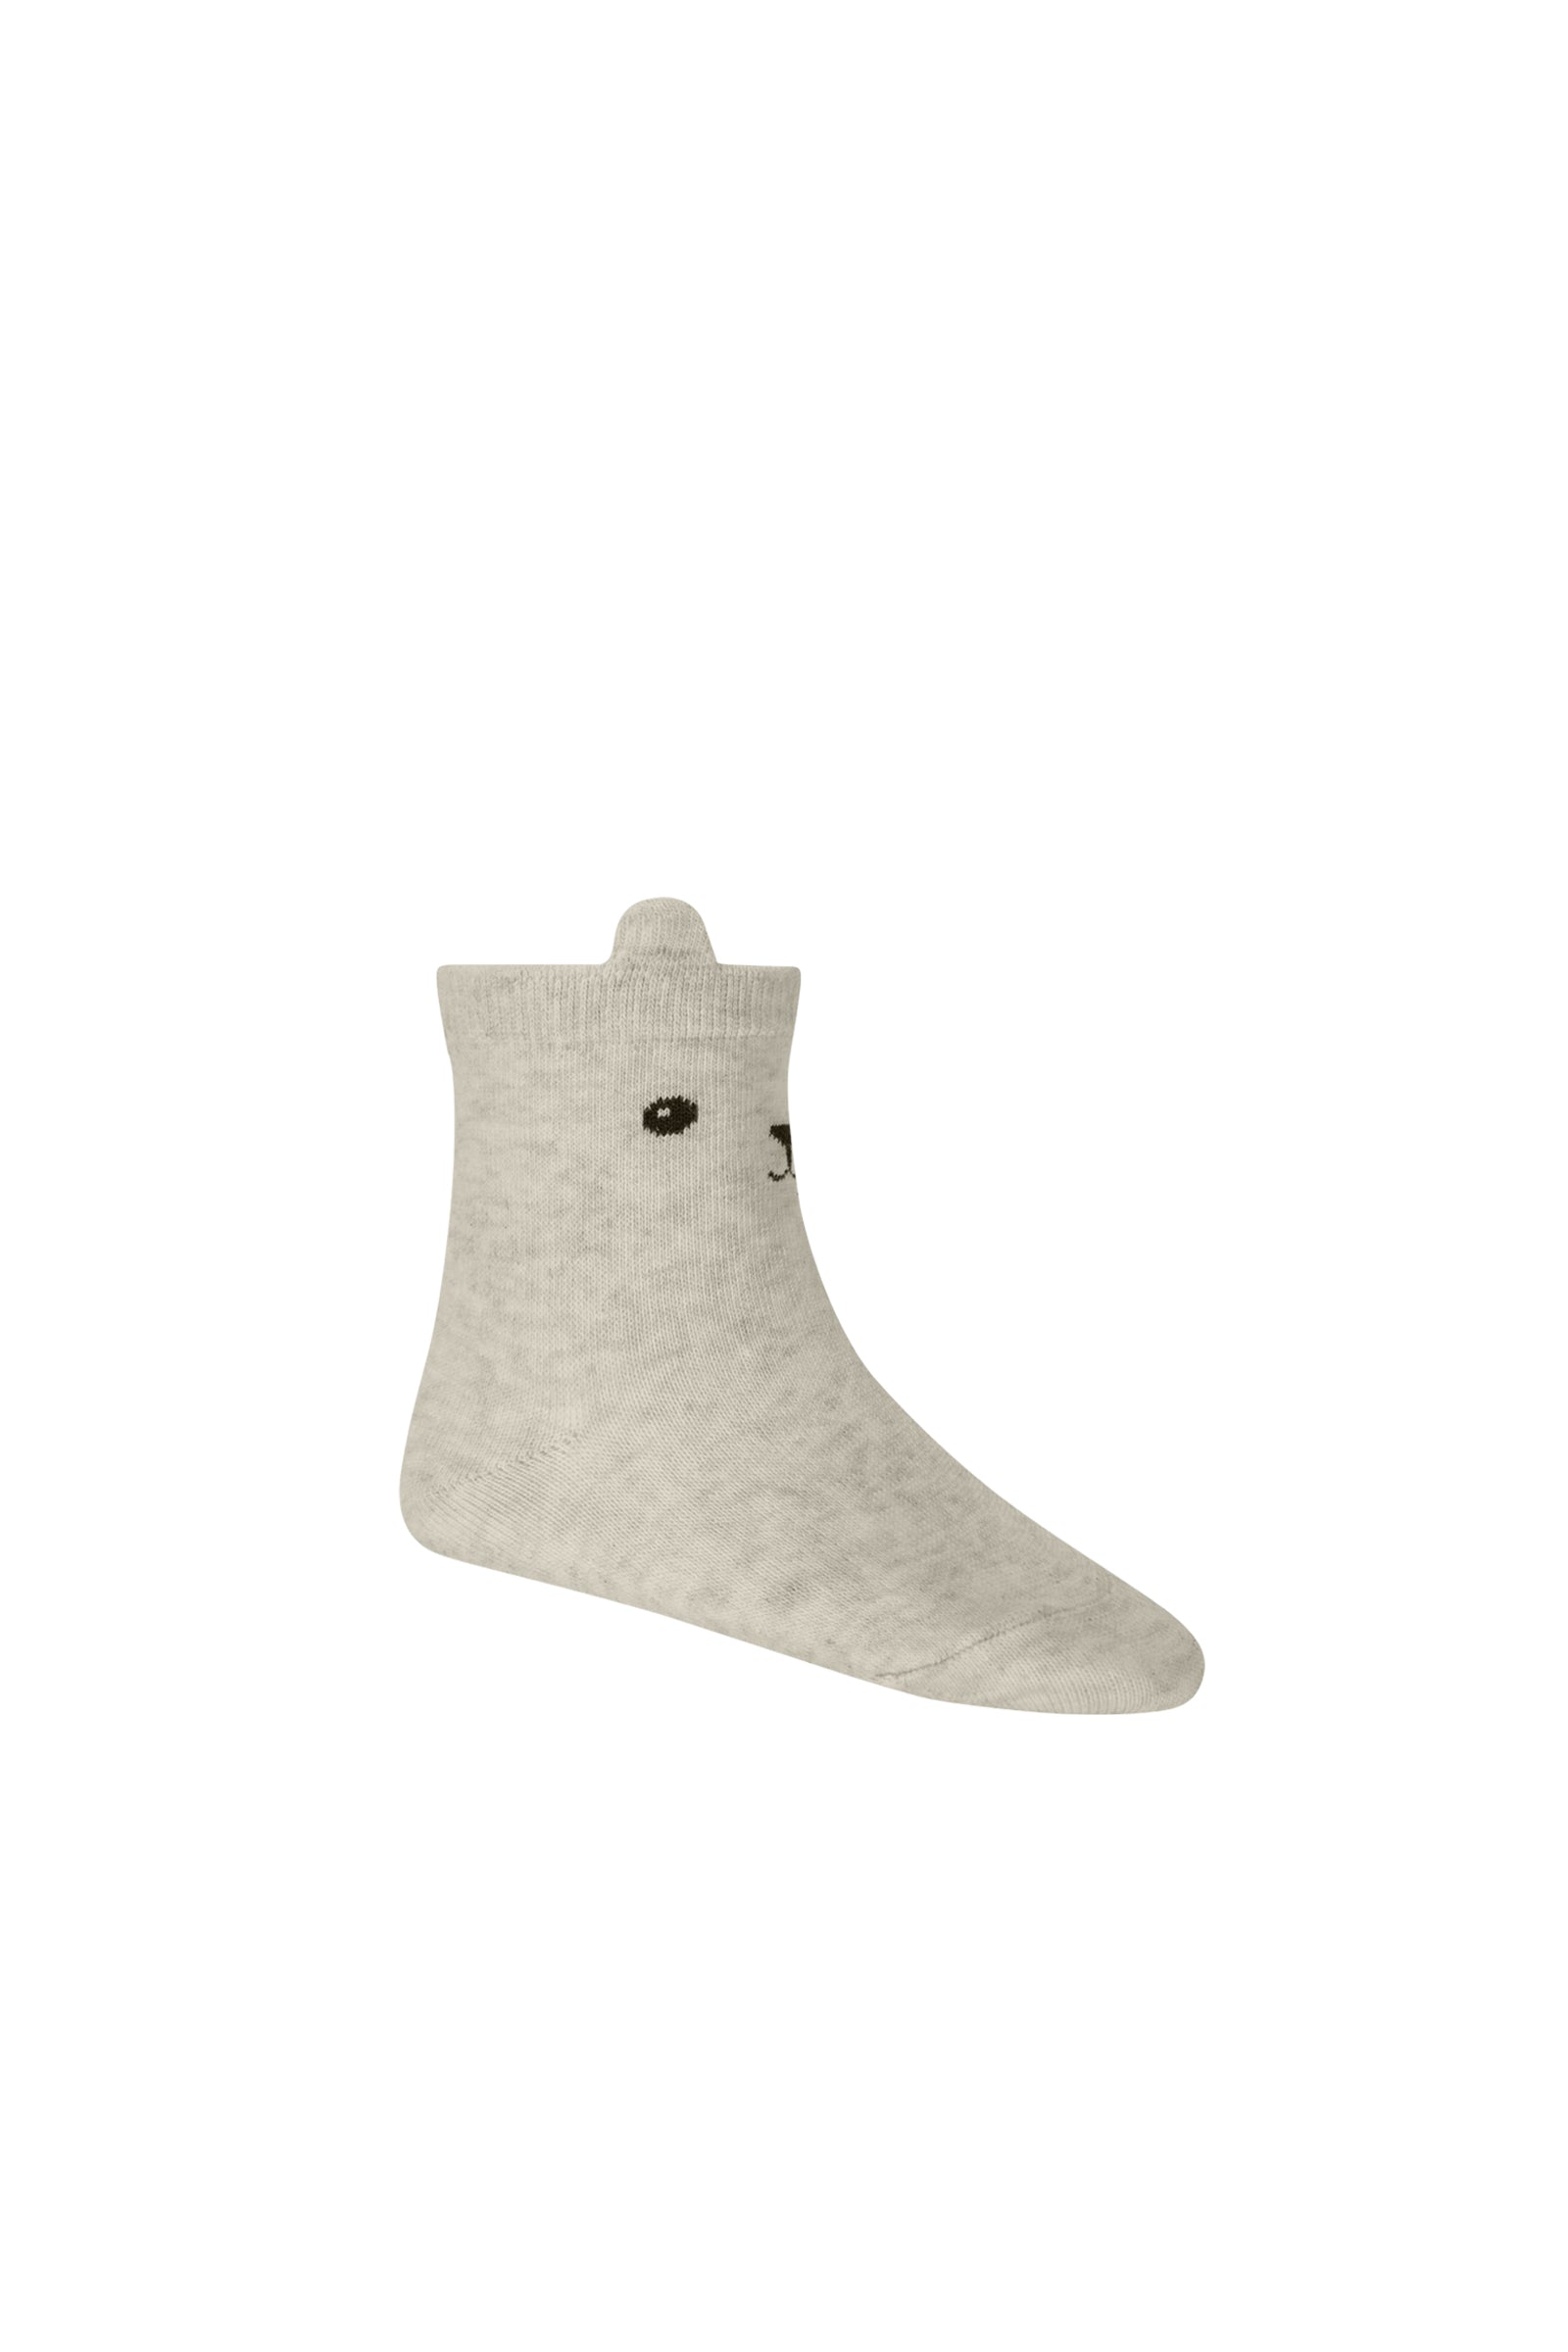 George Bear Ankle Sock - Oatmeal Marle-Shoes & Socks-Jamie Kay-The Bay Room